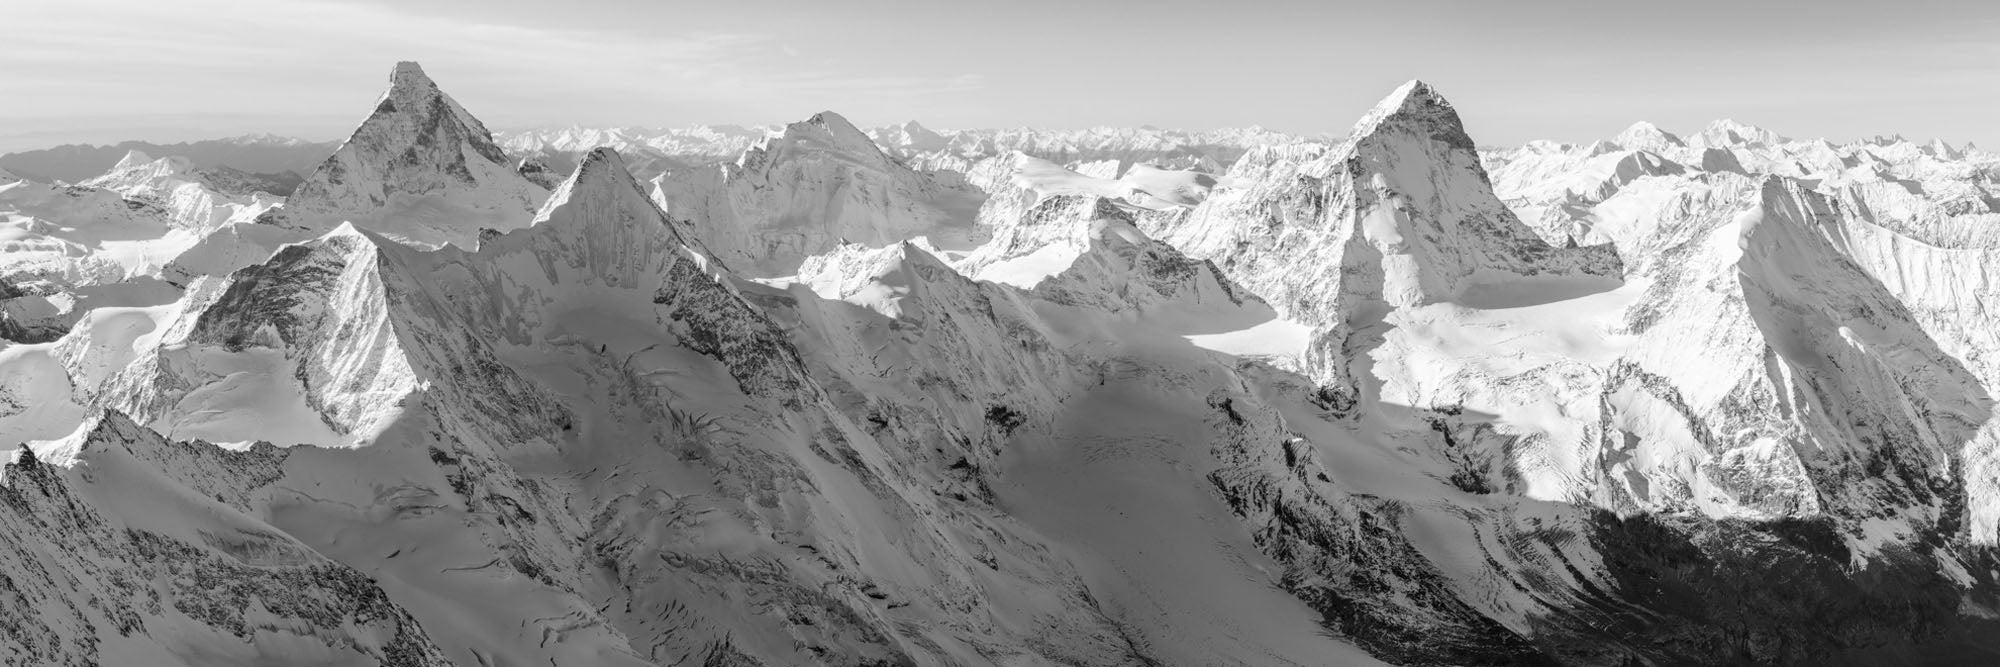 Zermatt and Chamonix, Panorama, Switzerland - Petra Gut Contemporary AG Thomas Crauwels